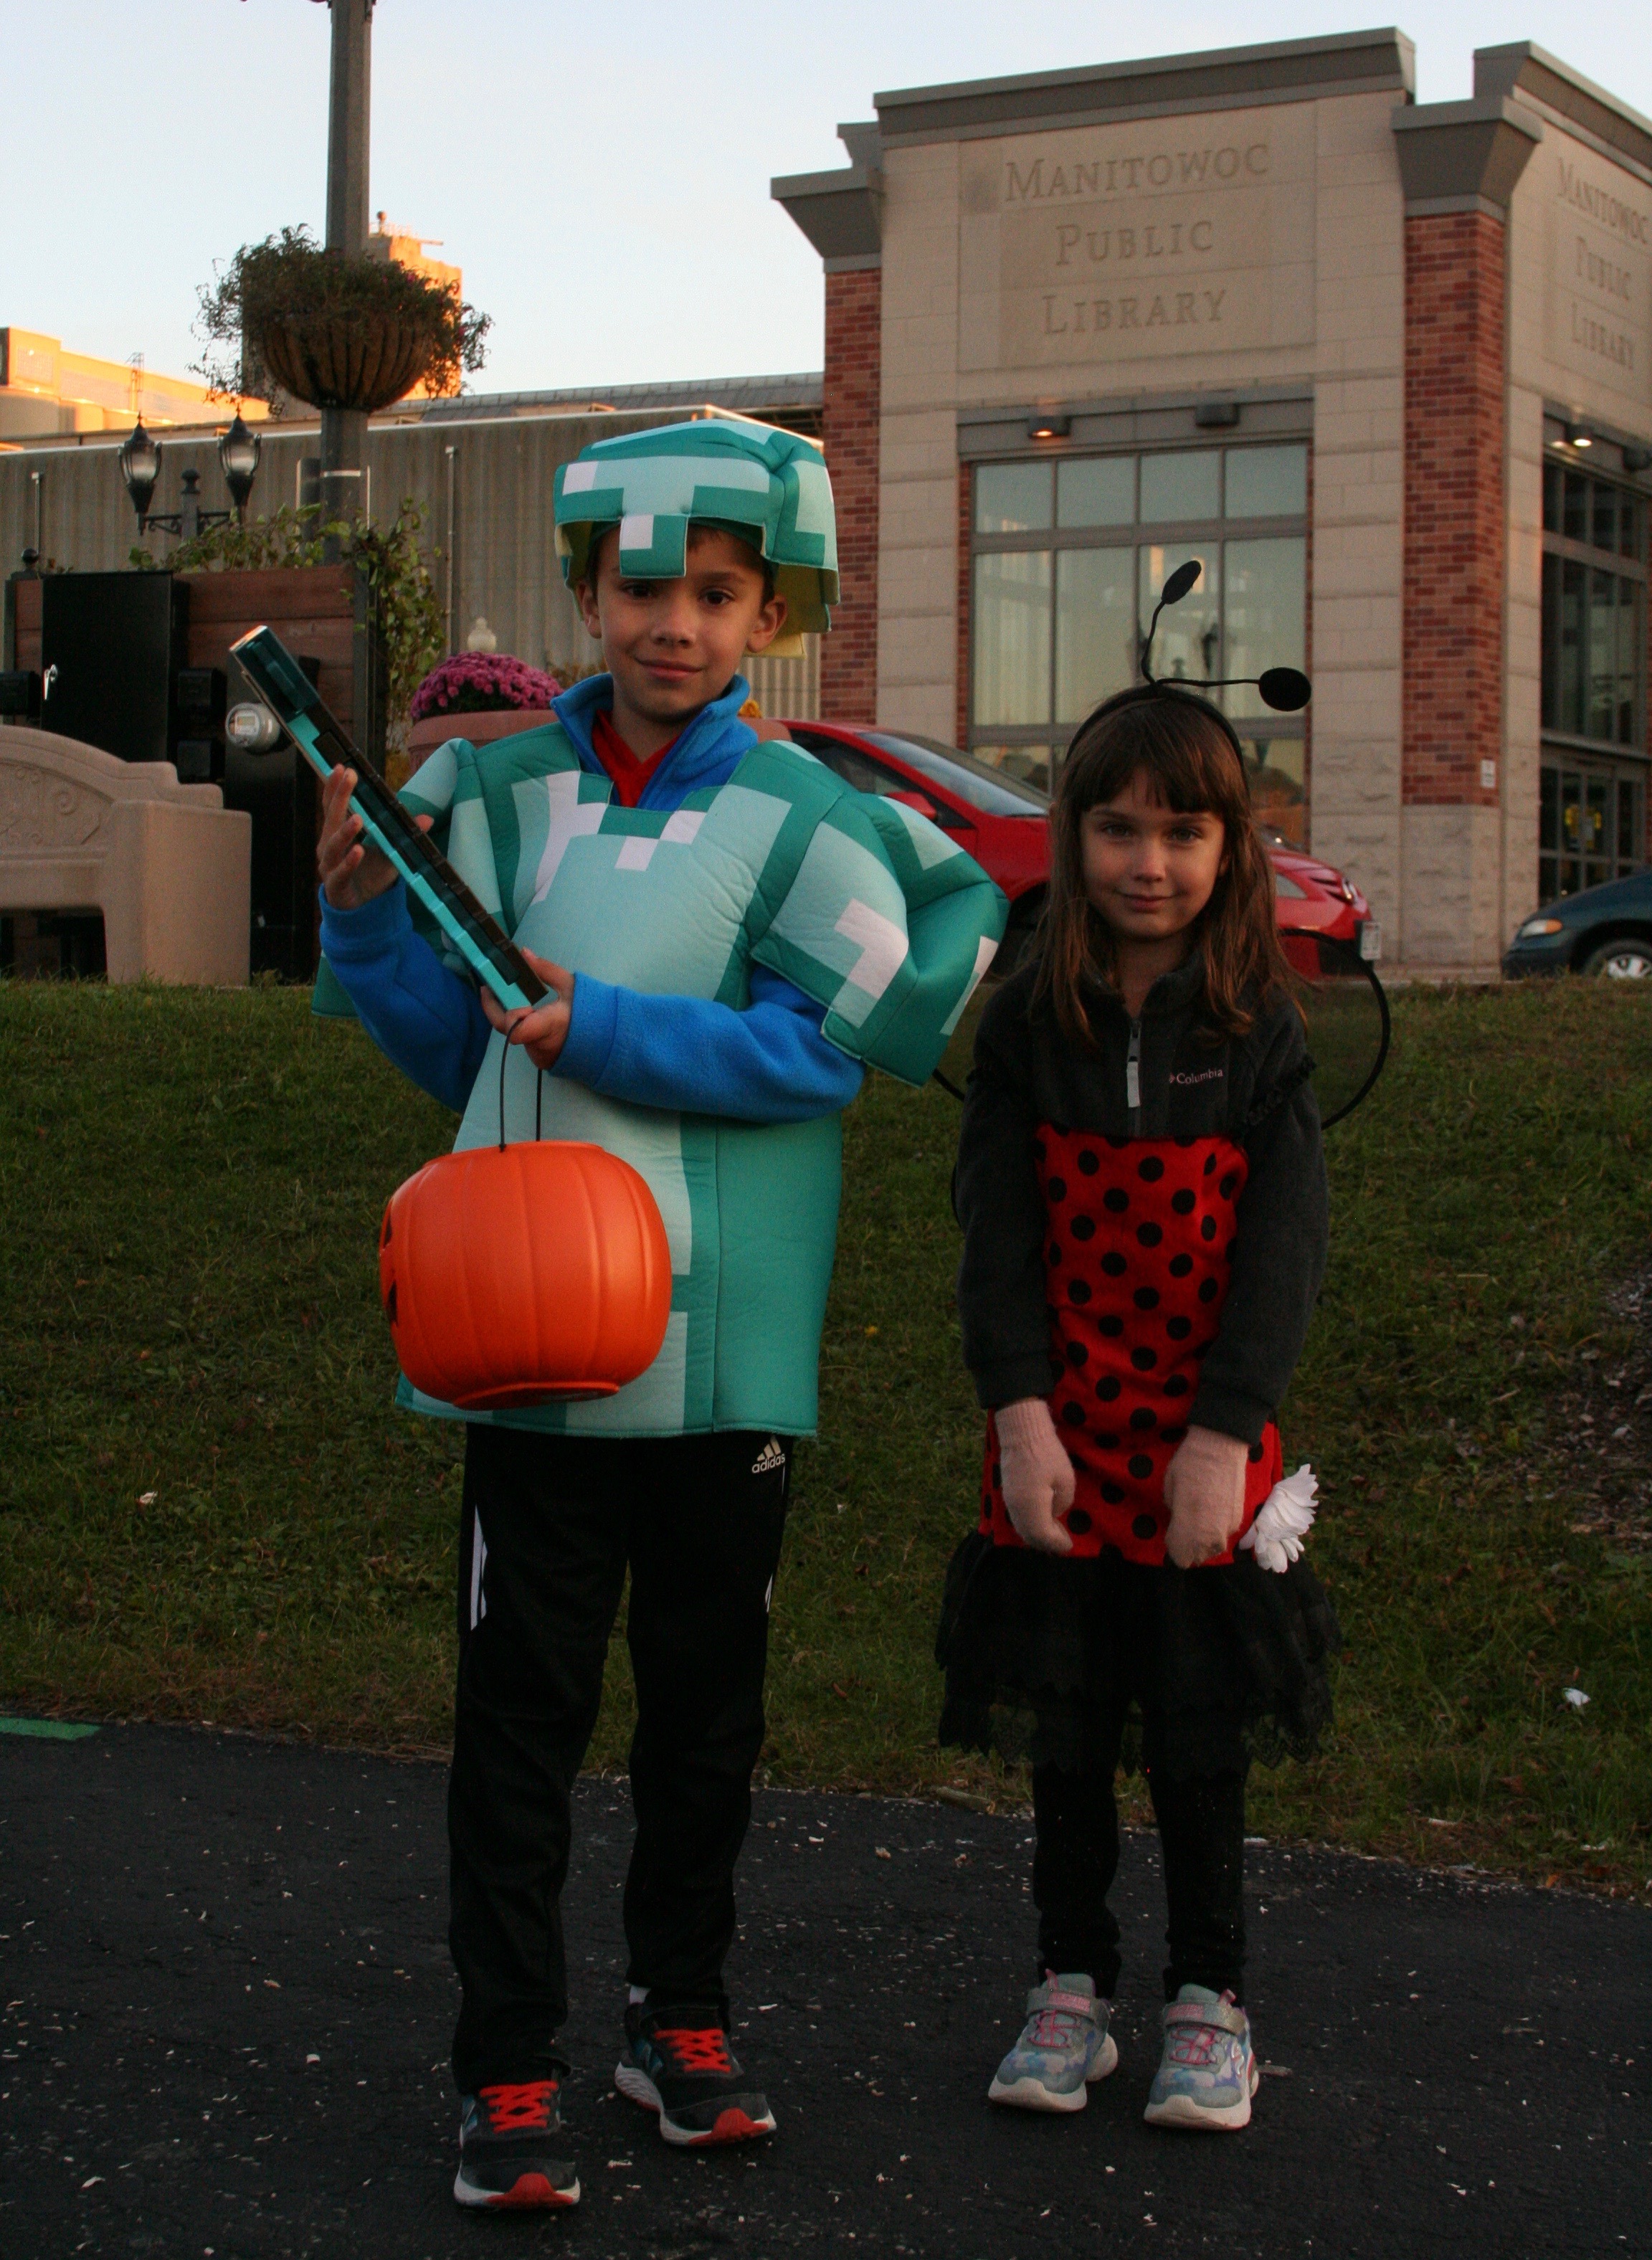 Costumed children